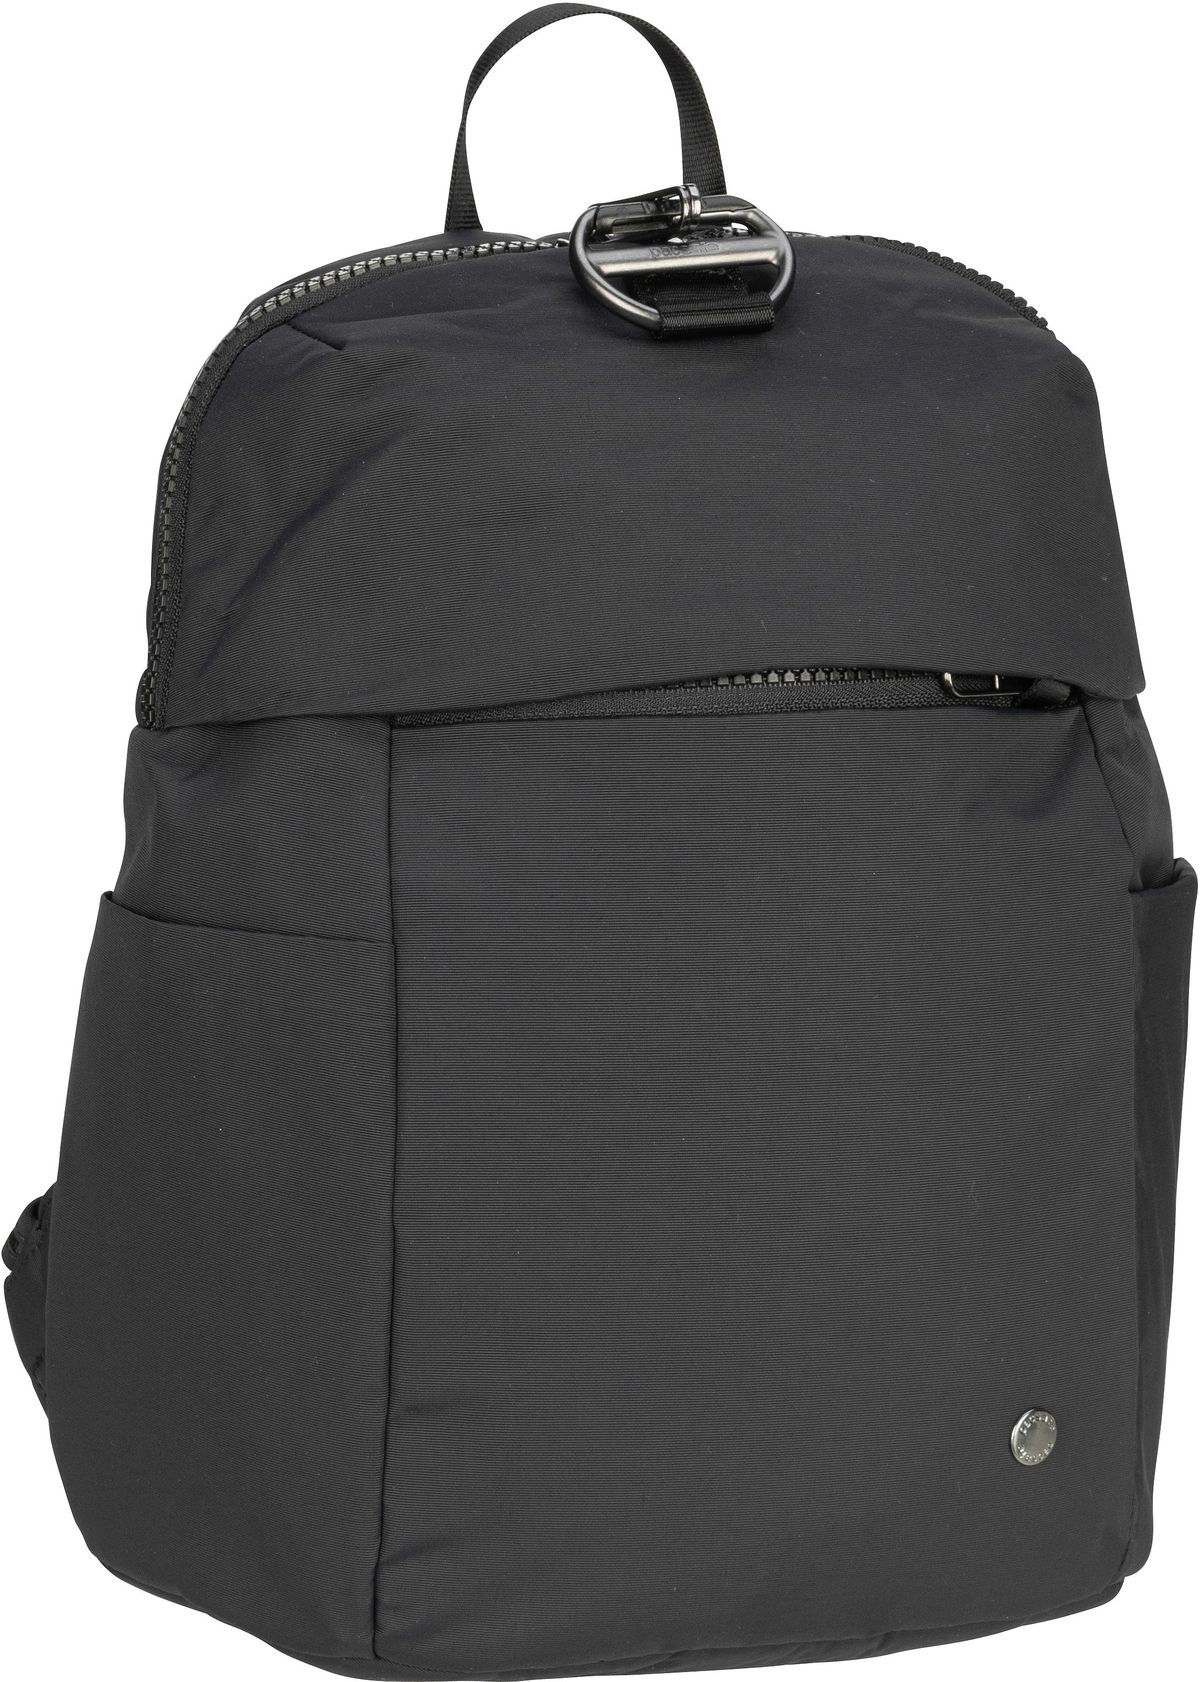 Pacsafe Pacsafe Citysafe CX Backpack Petite in Schwarz (8 Liter), Rucksack / Backpack